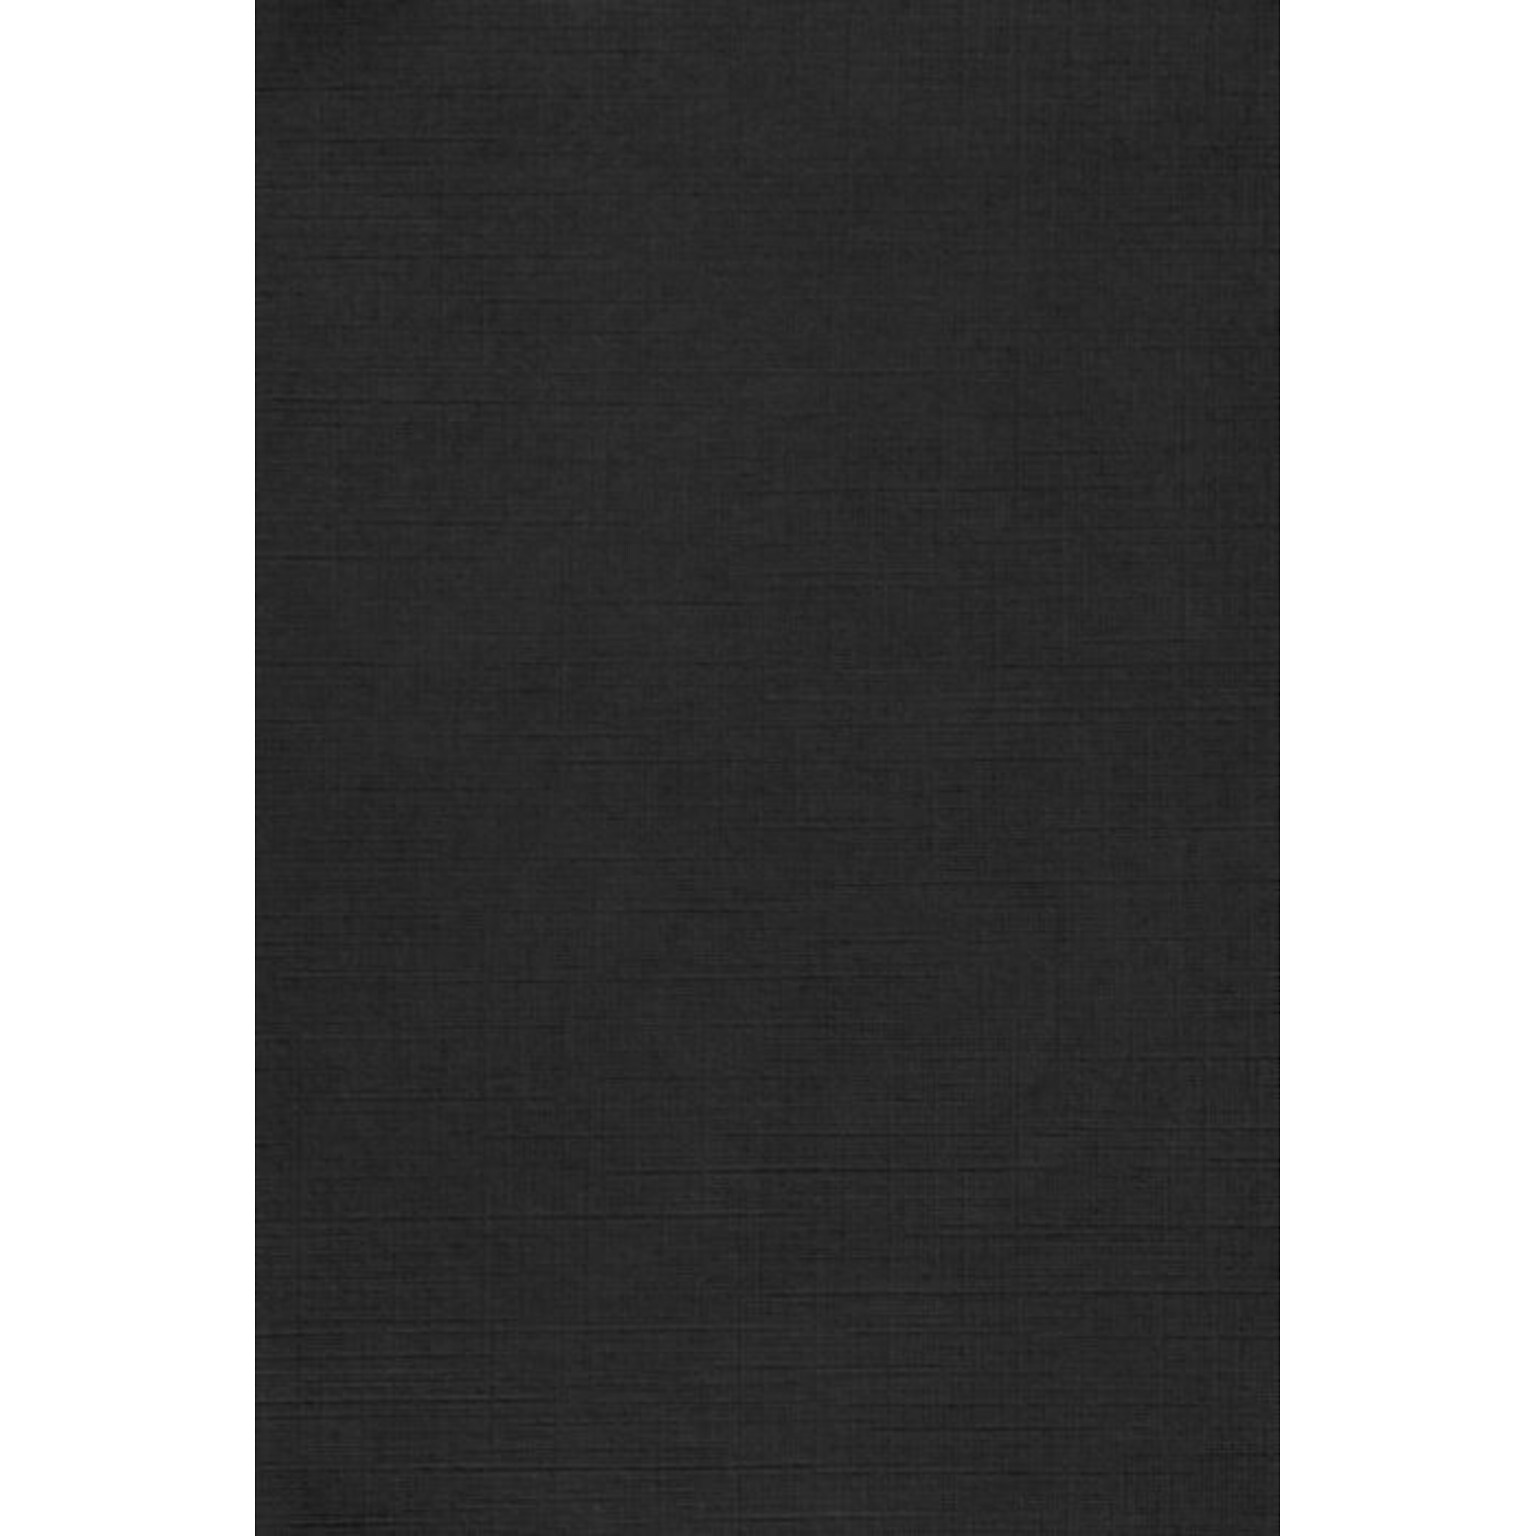 LUX Linen Collection 100 lb. Cardstock Paper, 12 x 18, Black, 1000 Sheets/Pack (1218-C-BLI-1000)